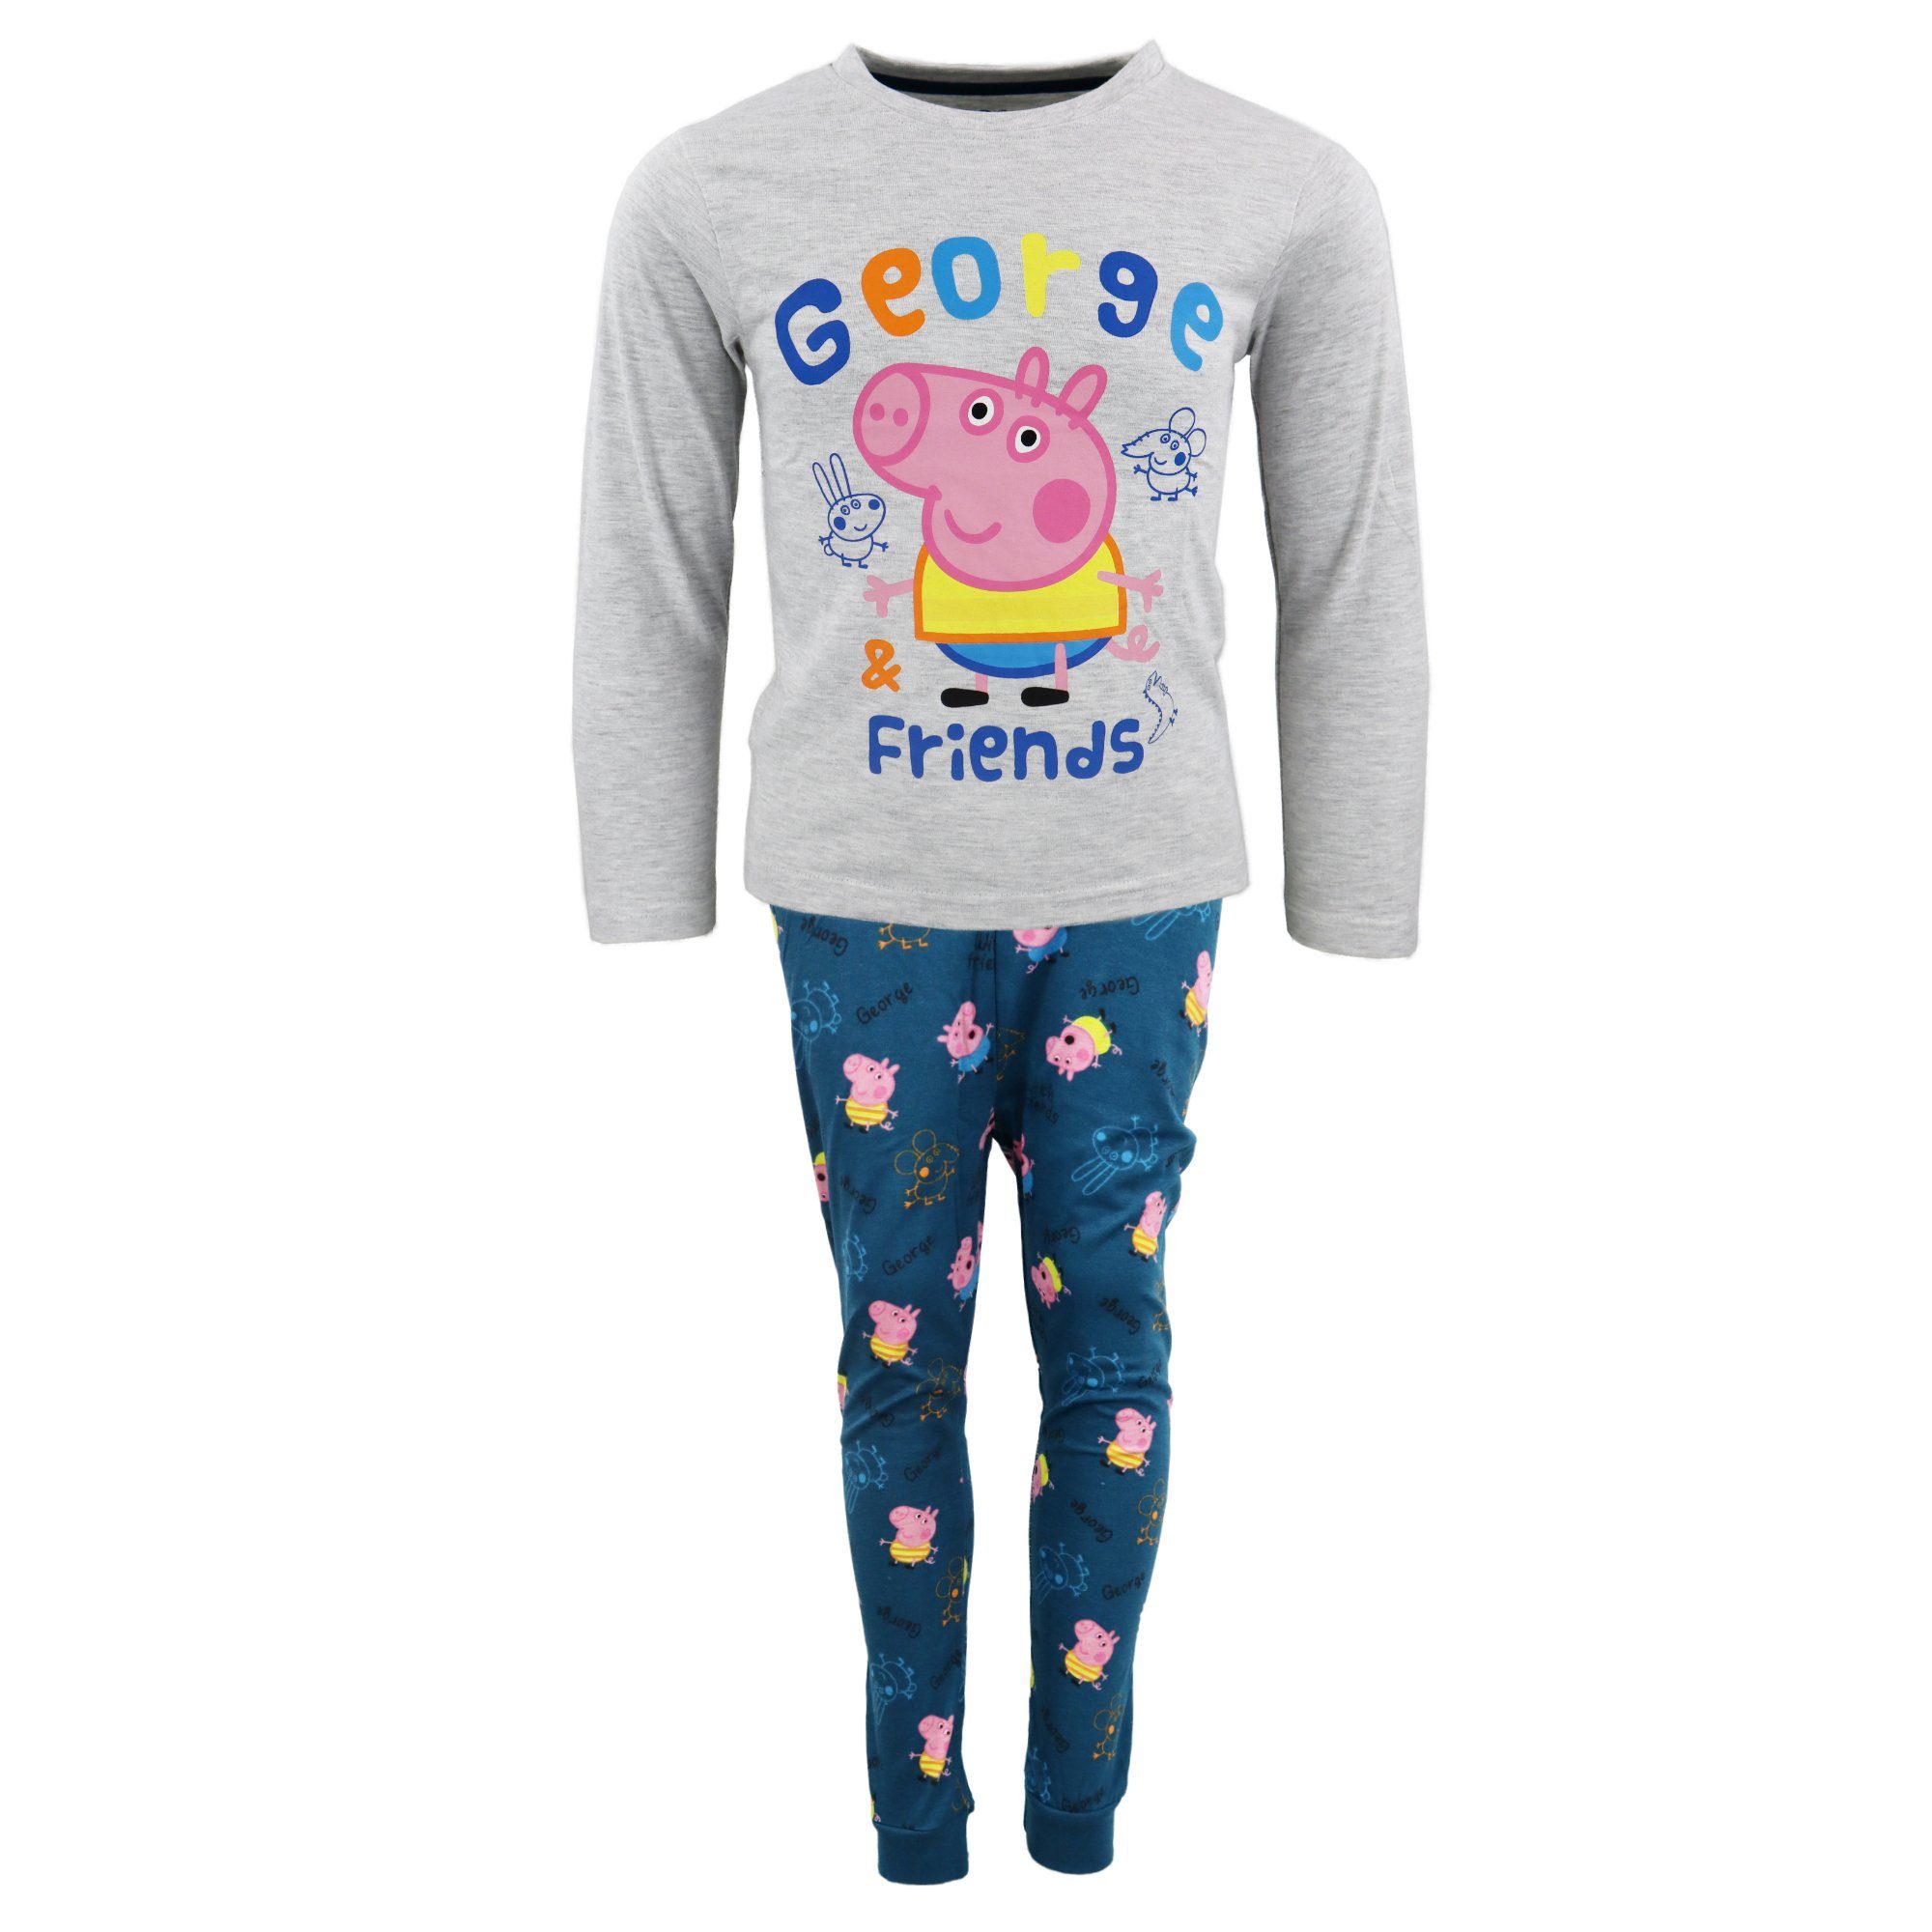 Peppa Pig Schlafanzug Kinder 92 Peppa Wutz George Hellgrau 116 Pig Shirt Pyjama bis Hose Gr. Jungen